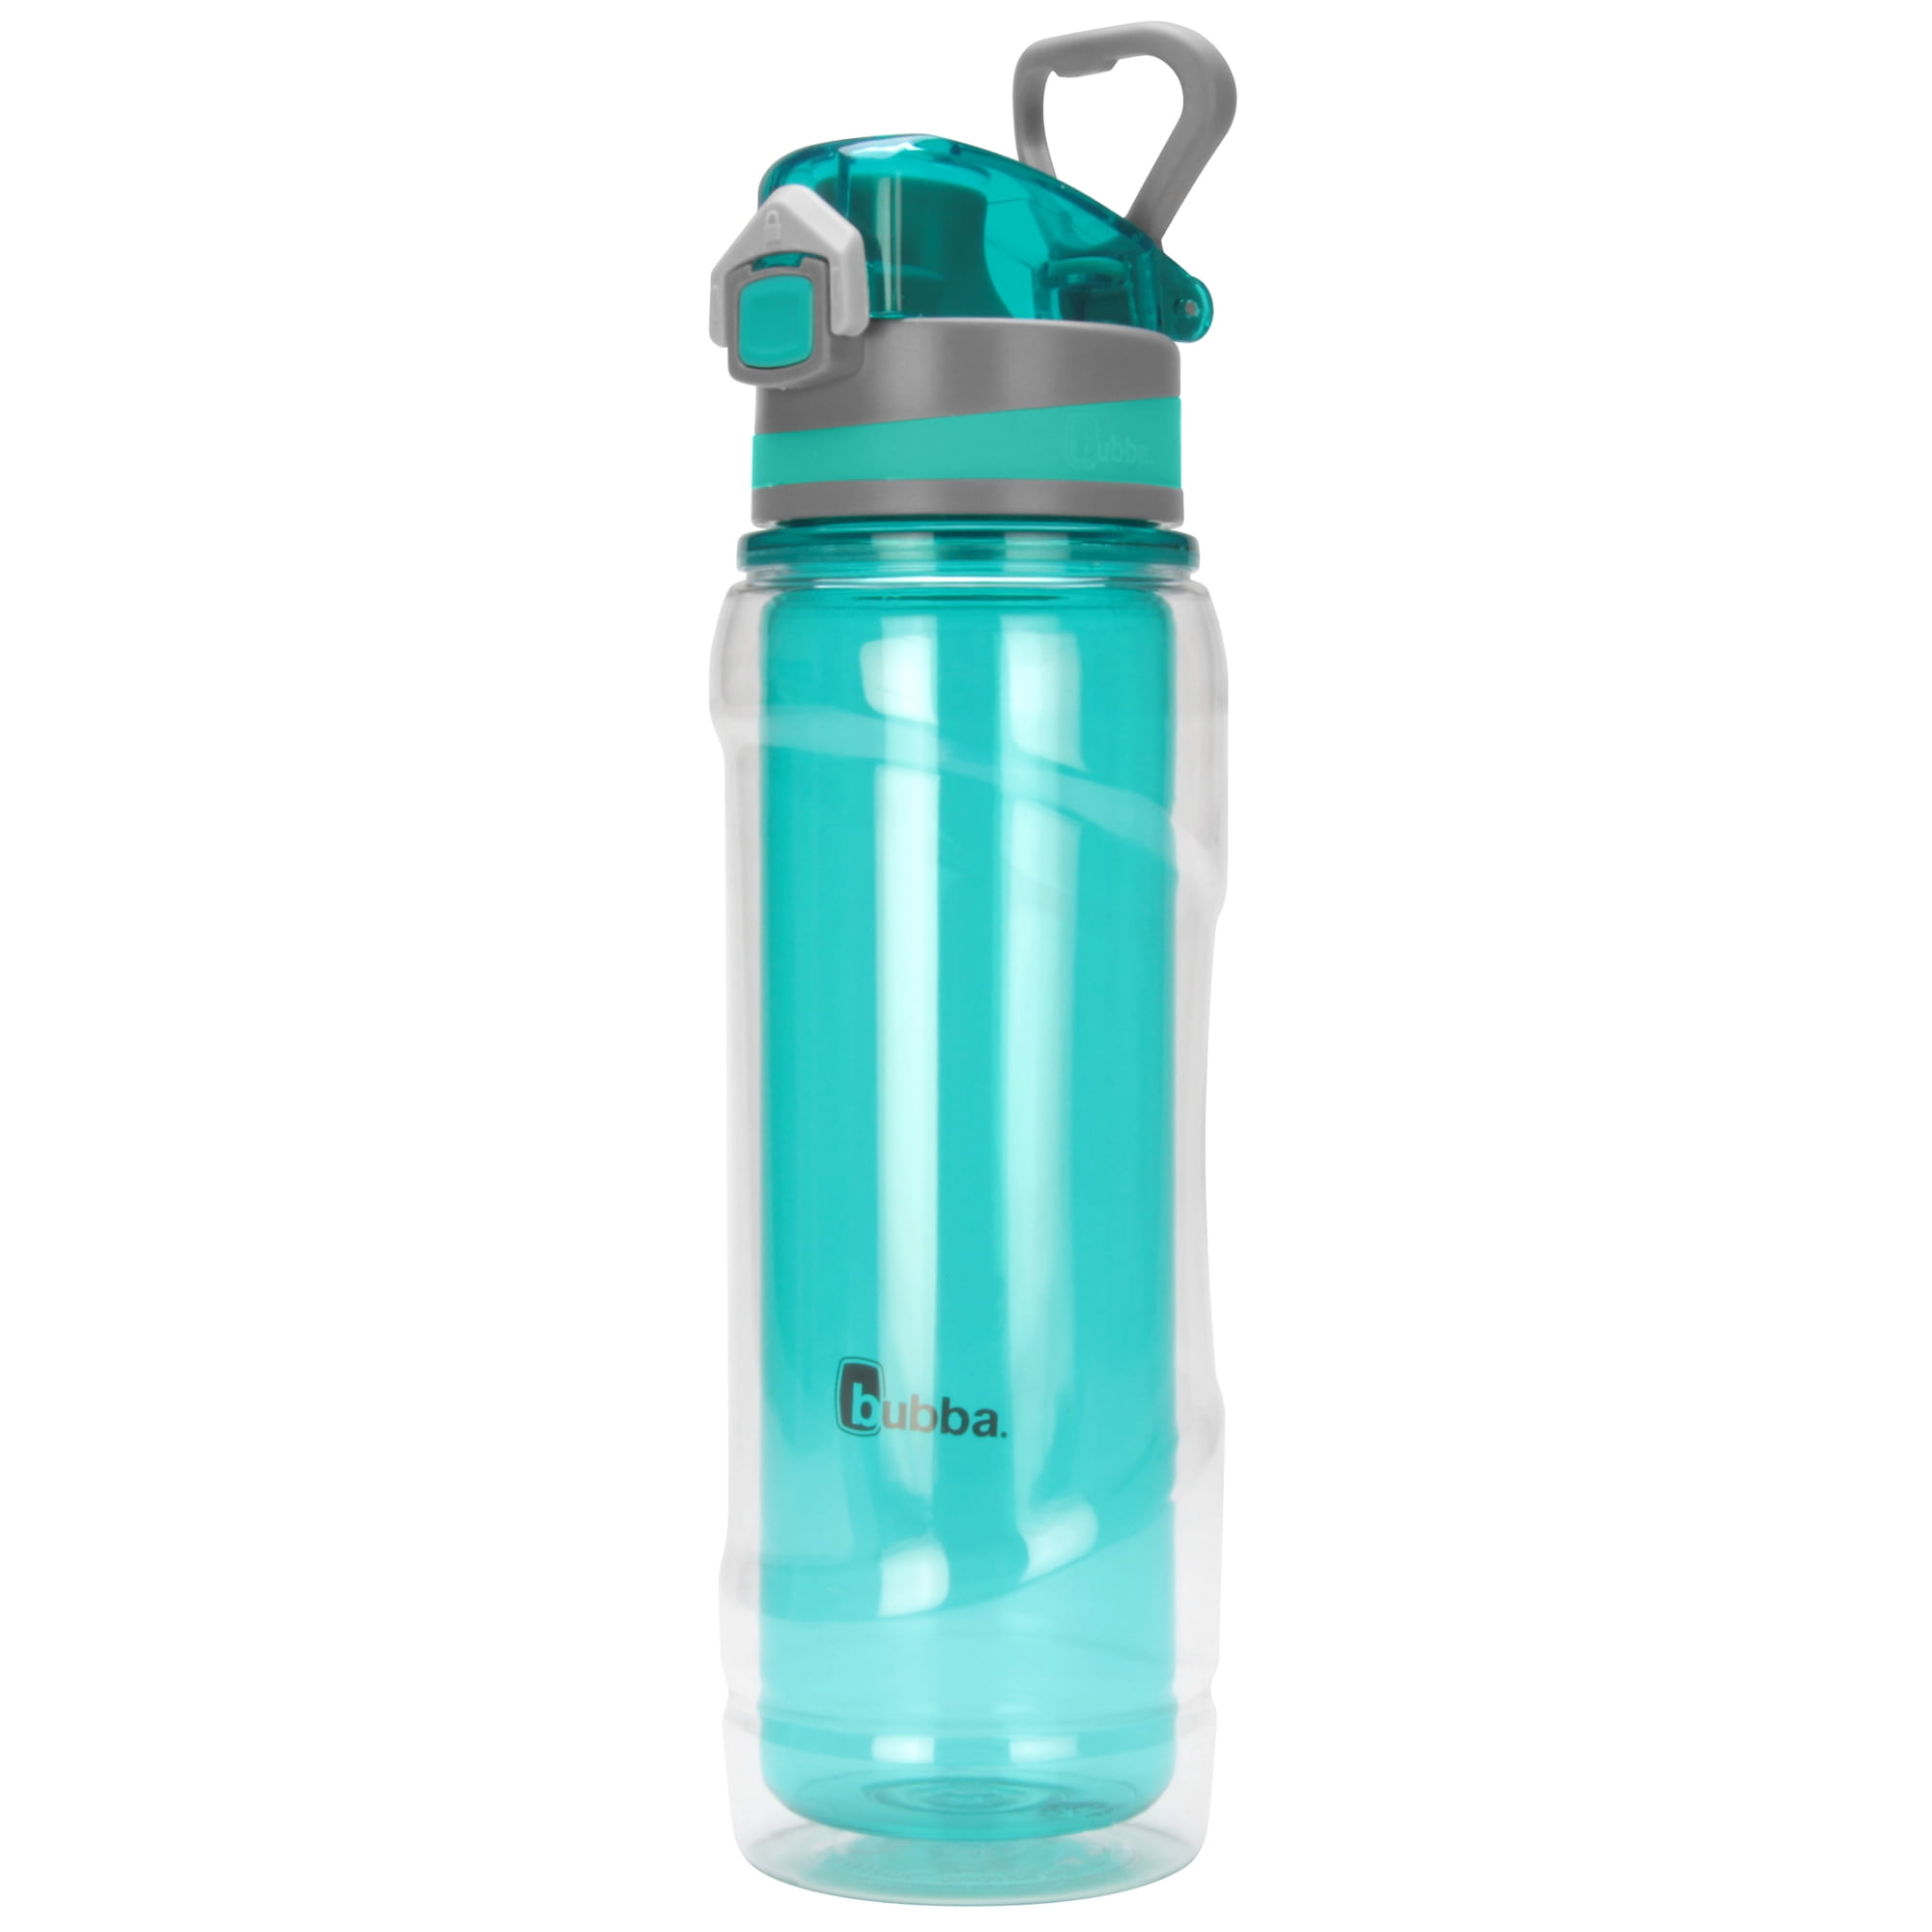 Bubba Vibe Straw Spout Hydration Bottle 28oz - Island Teal Reviews 2023